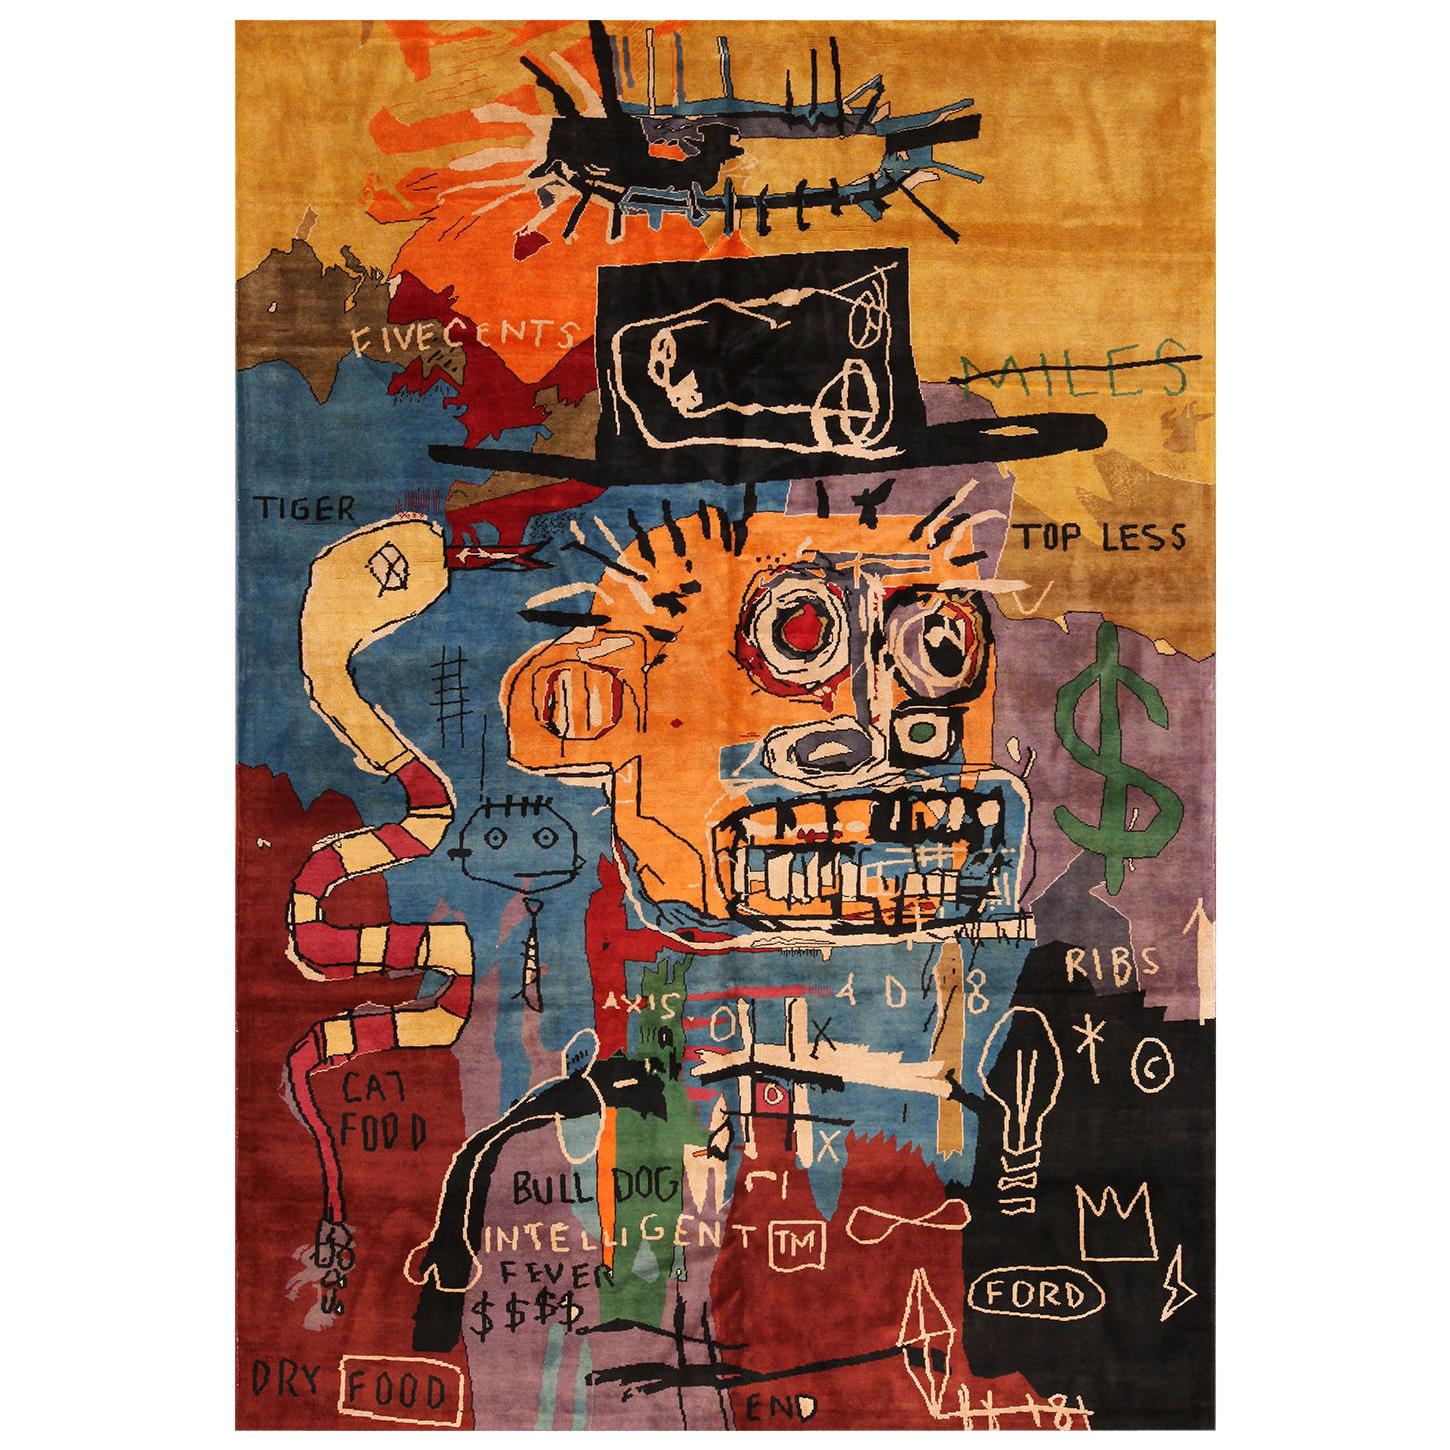 Modern Basquiat Inspired Art Rug. Size: 6 ft. 9 in x 9 ft. 9 in